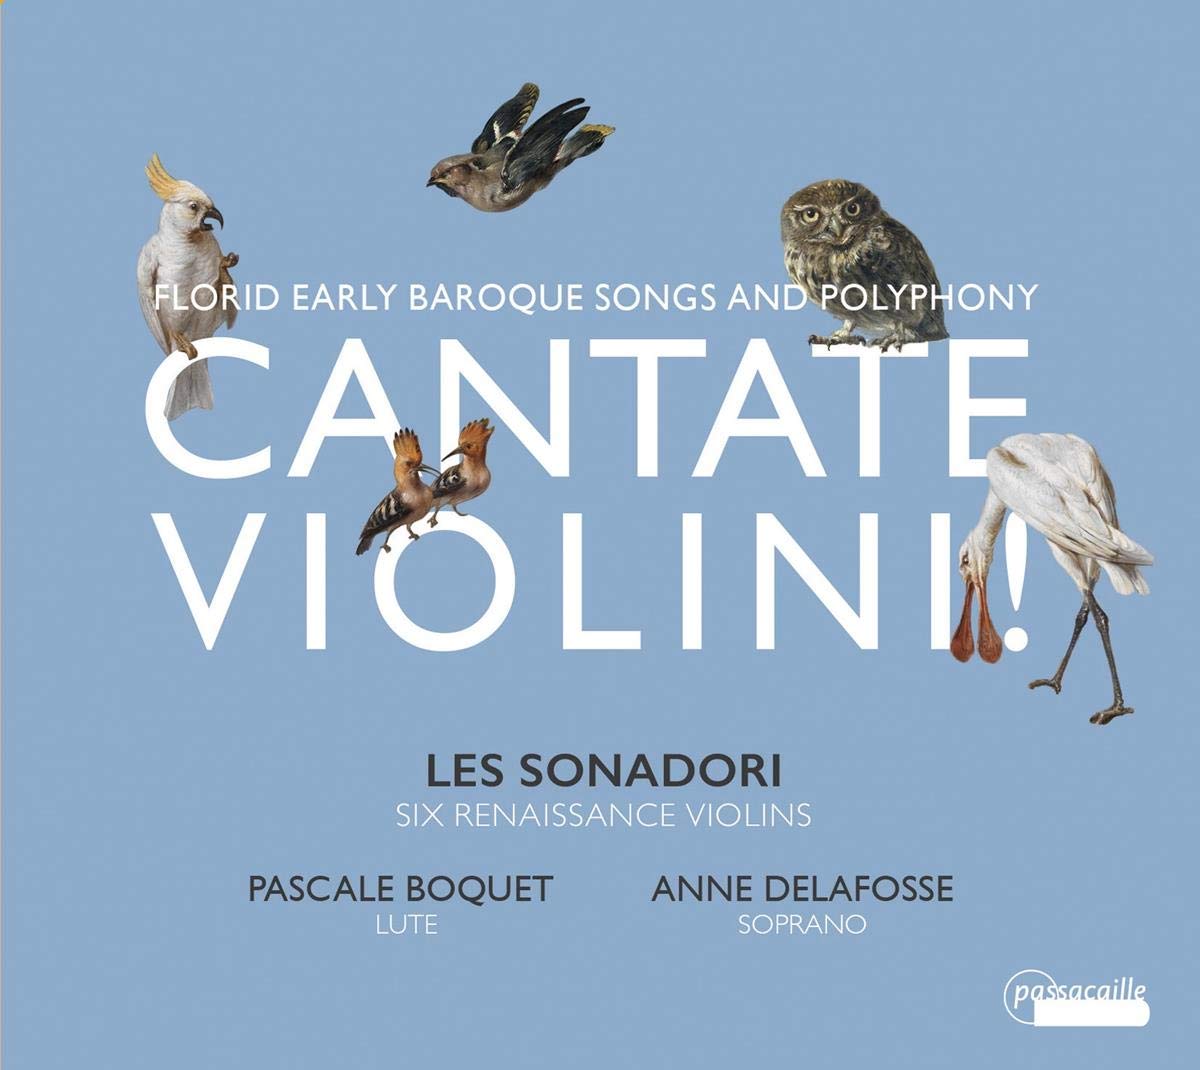 Cantate Violini! Florid Early Baroque Songs and Polyphony - Delafosse, Boquet, Les Sonadoris